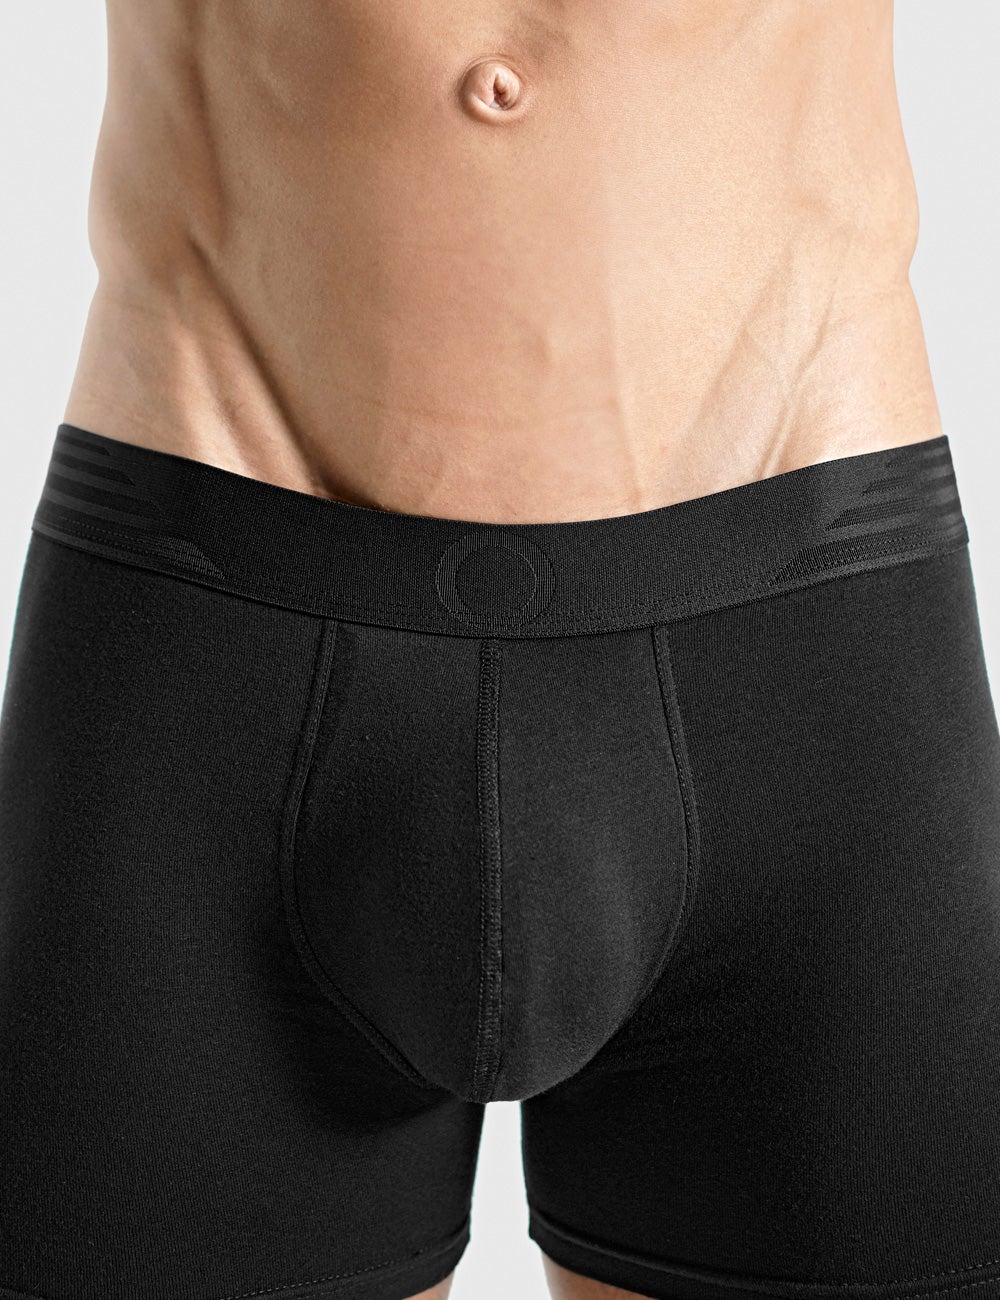 VhoMes Mens Padded Underwear Butt Enhancer Mesh Boxer Briefs Body